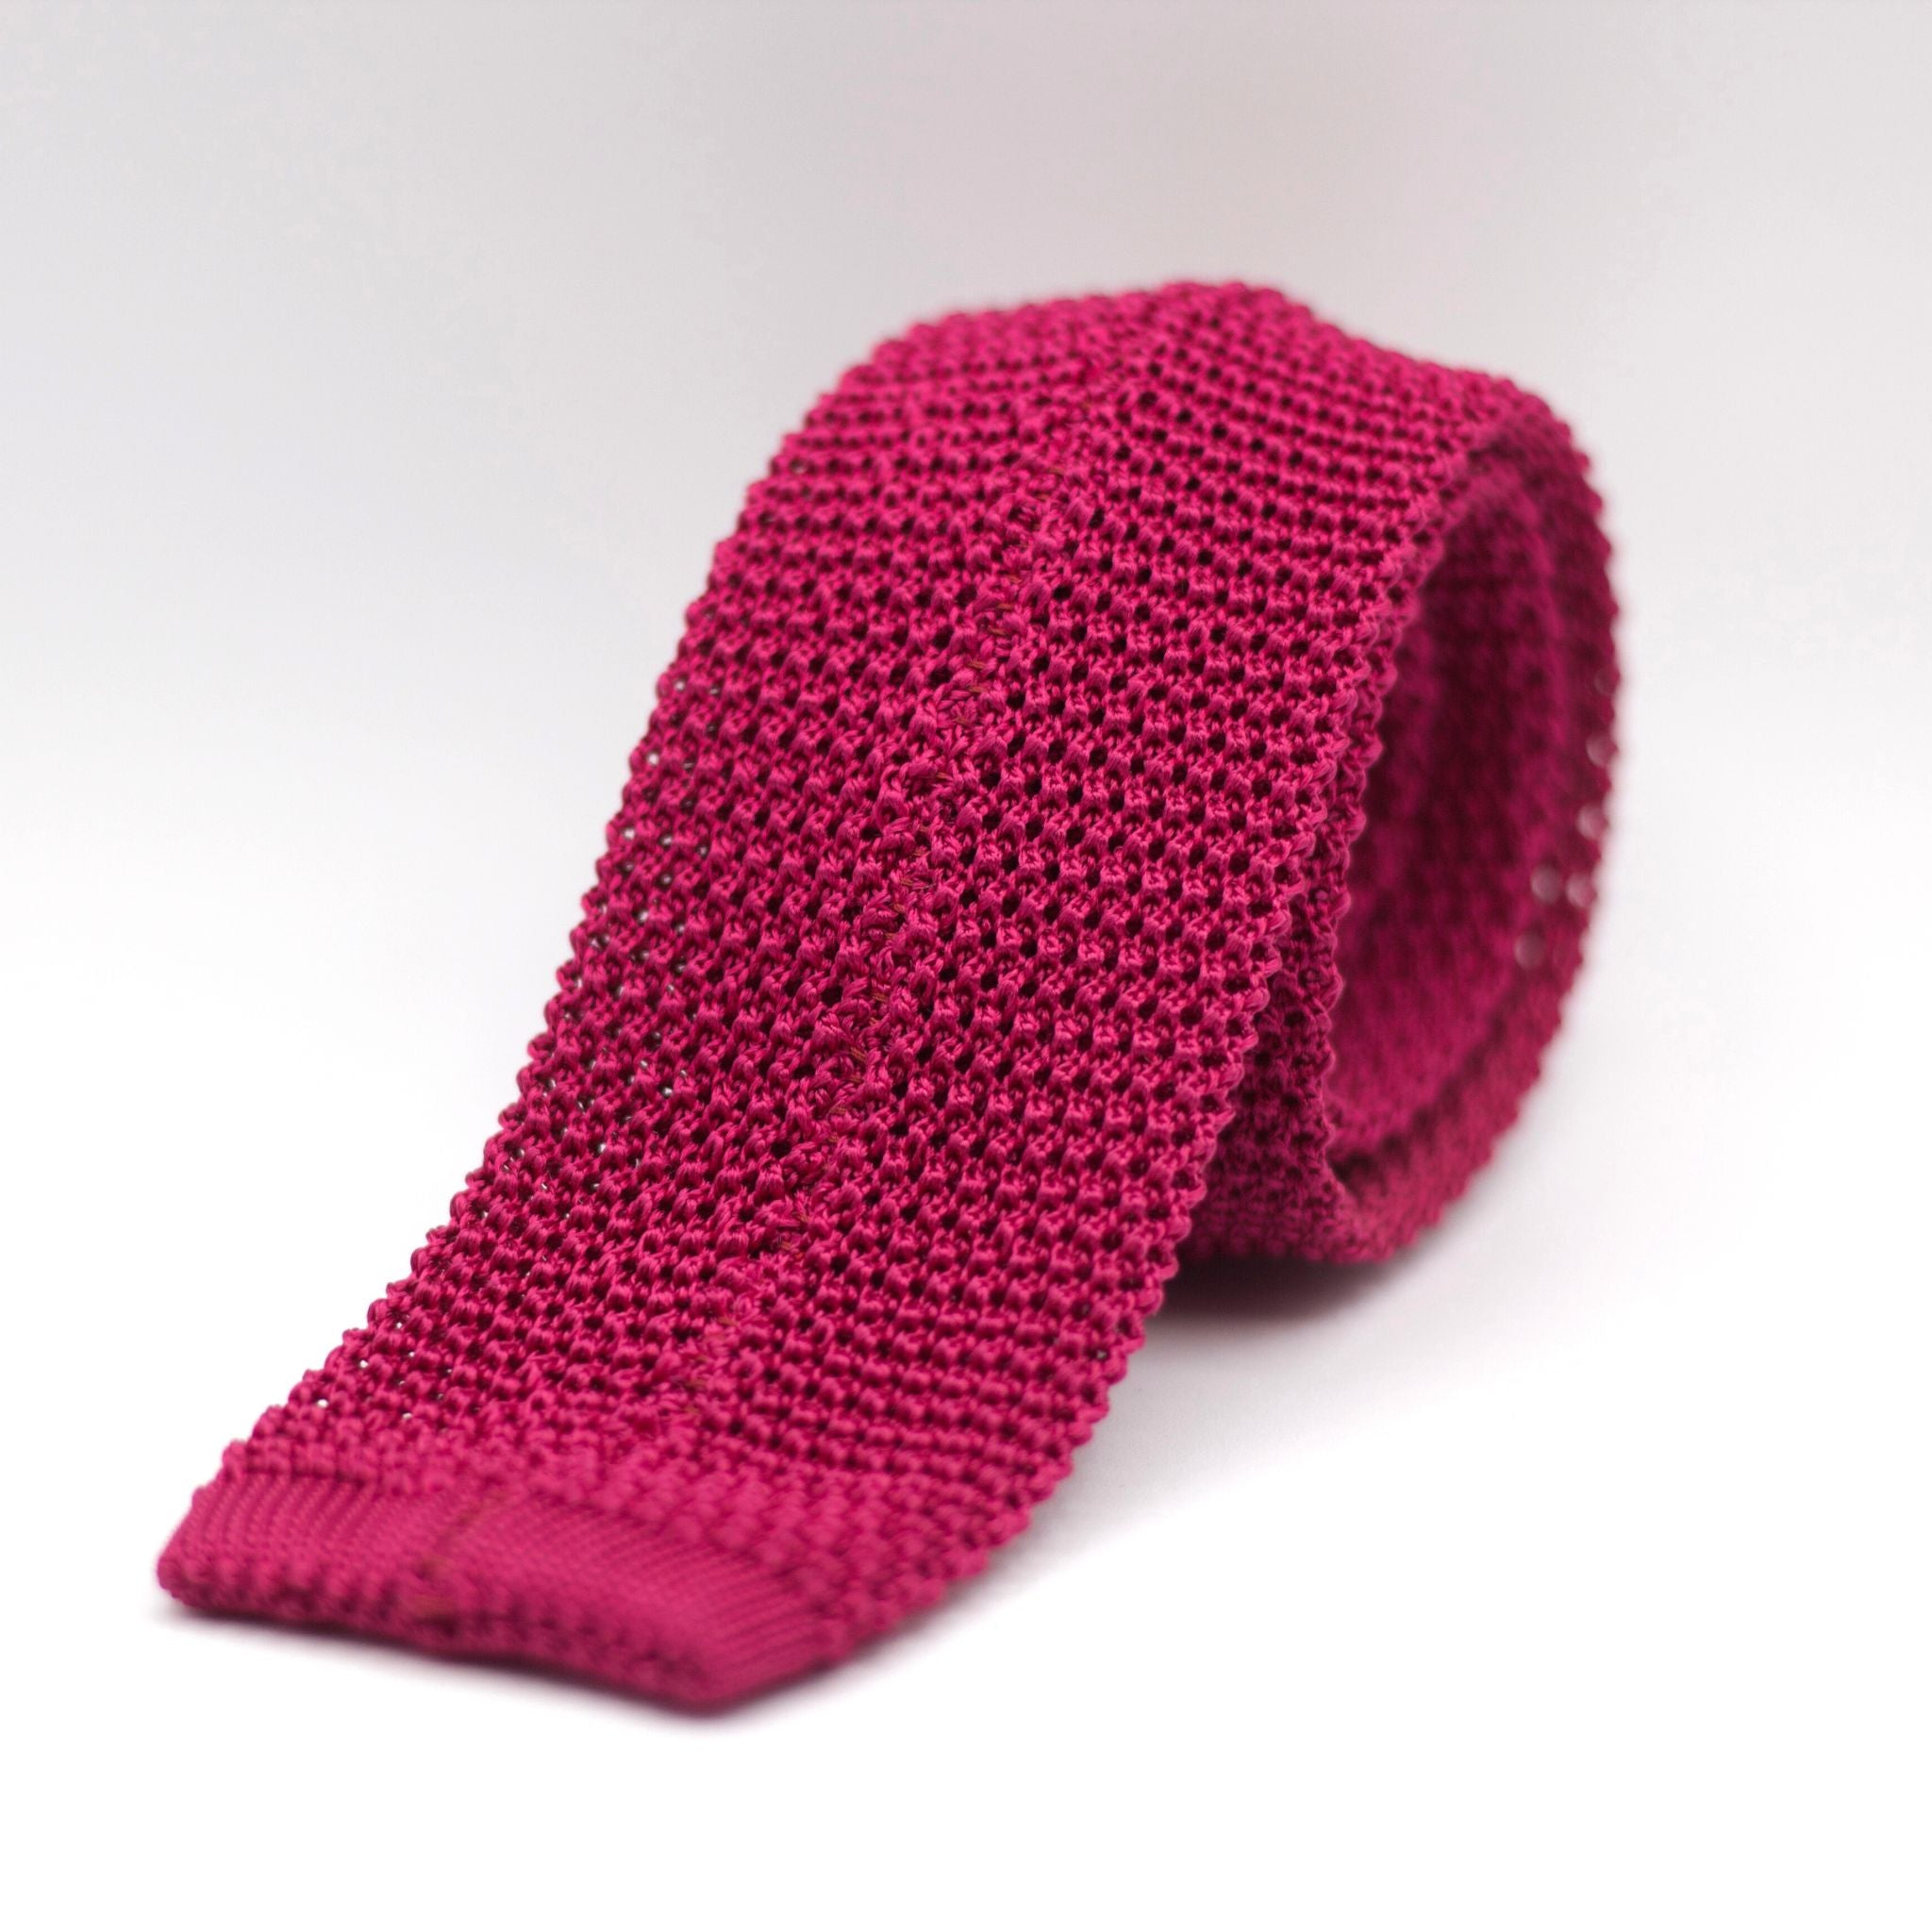 Cruciani & Bella 100% Knitted Silk Dark Pink tie Handmade in Italy 6 cm x 147 cm